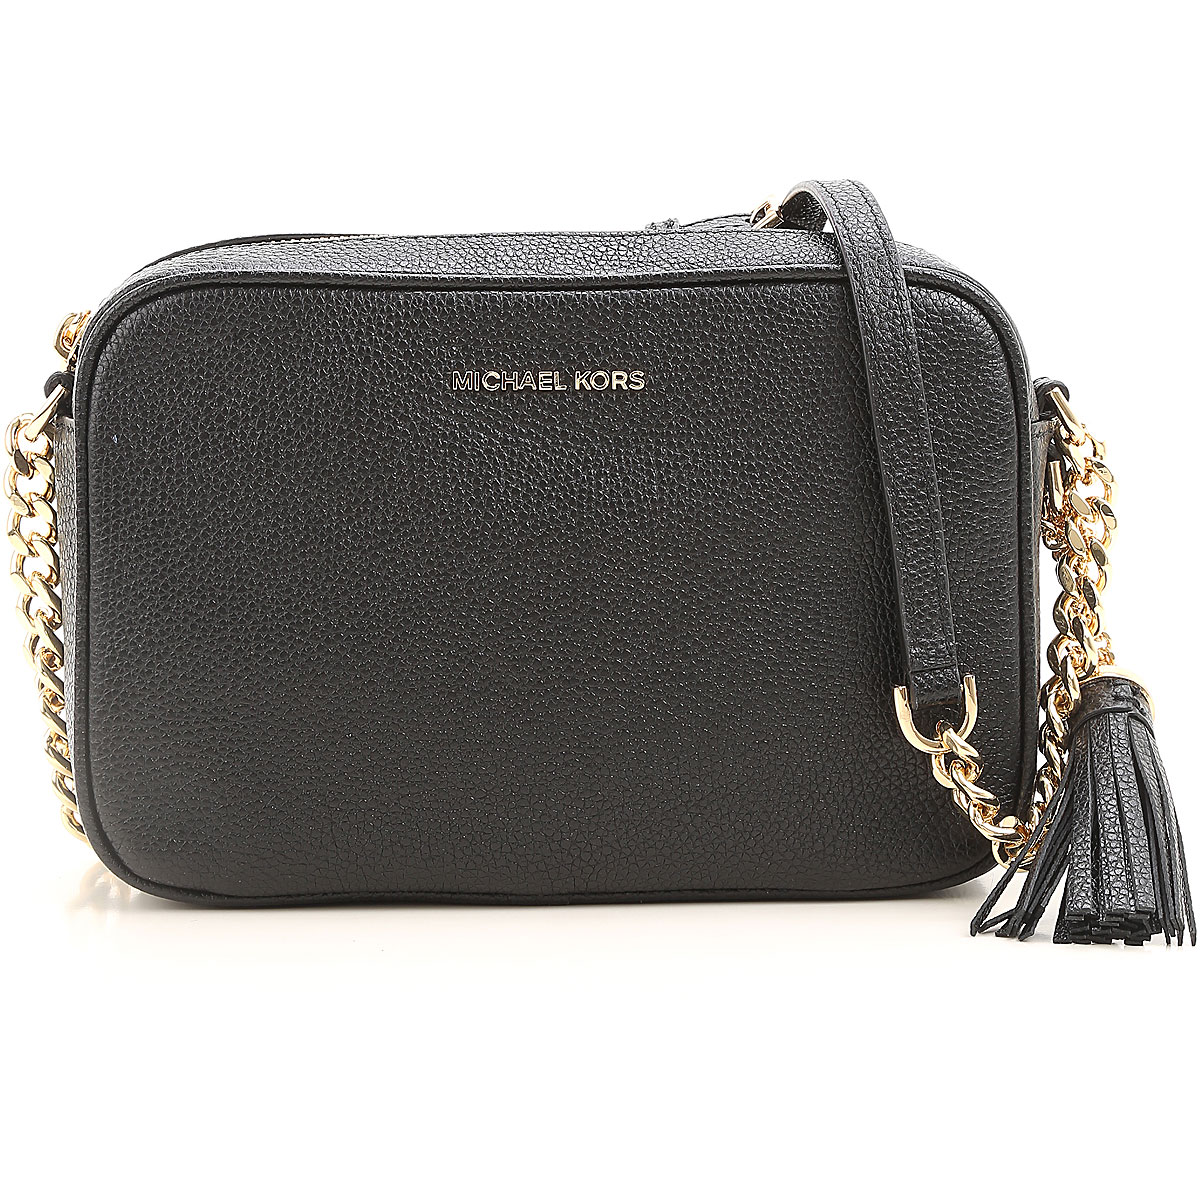 Handbags Michael Kors, Style code: 32f7ggnm8l-001-A329